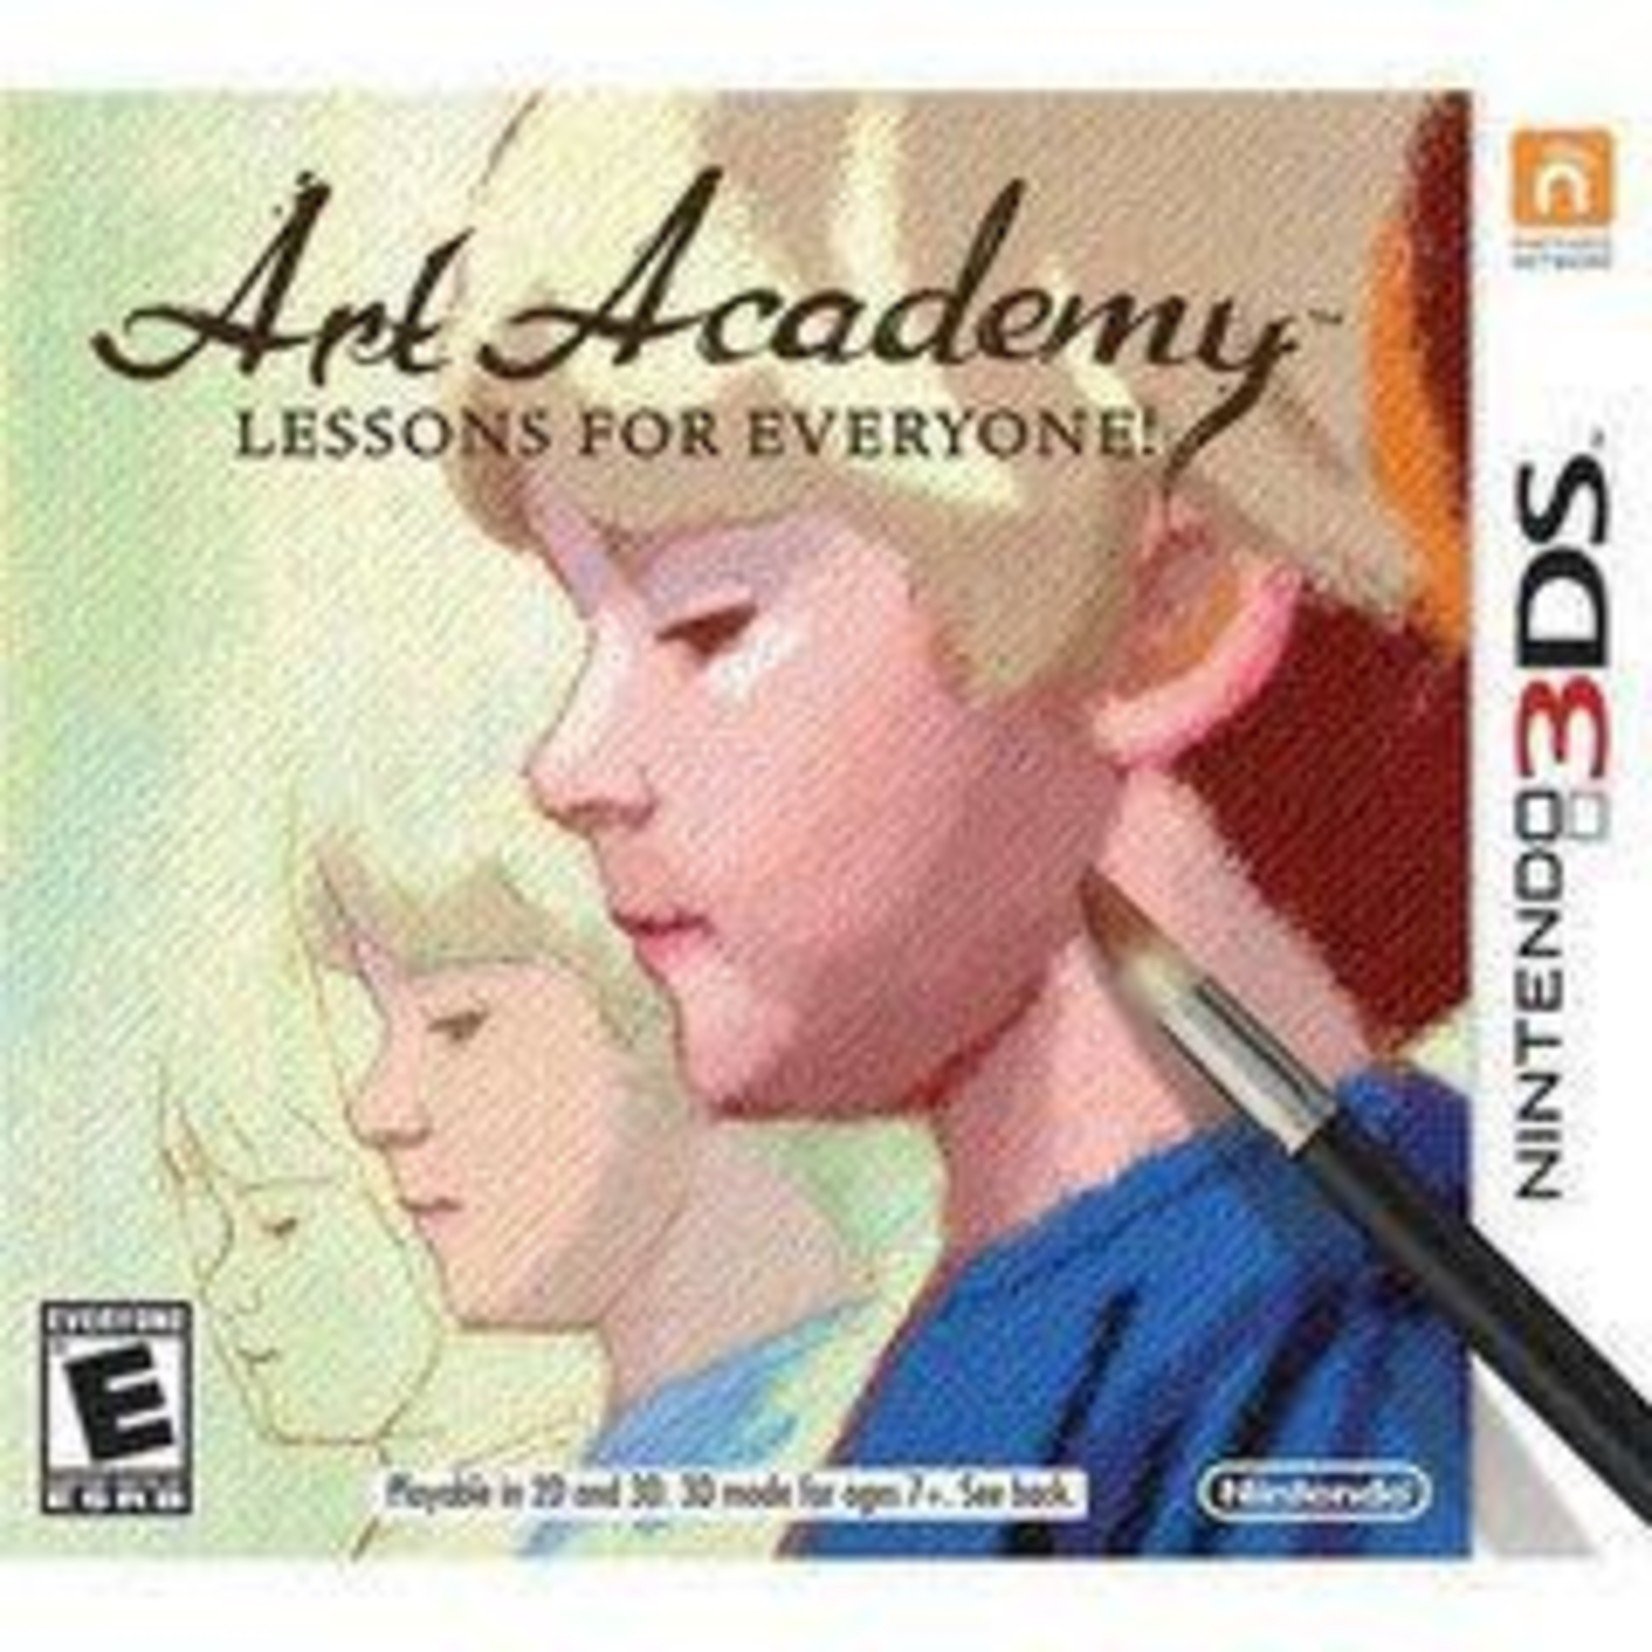 Nintendo Art Academy: Lessons for Everyone